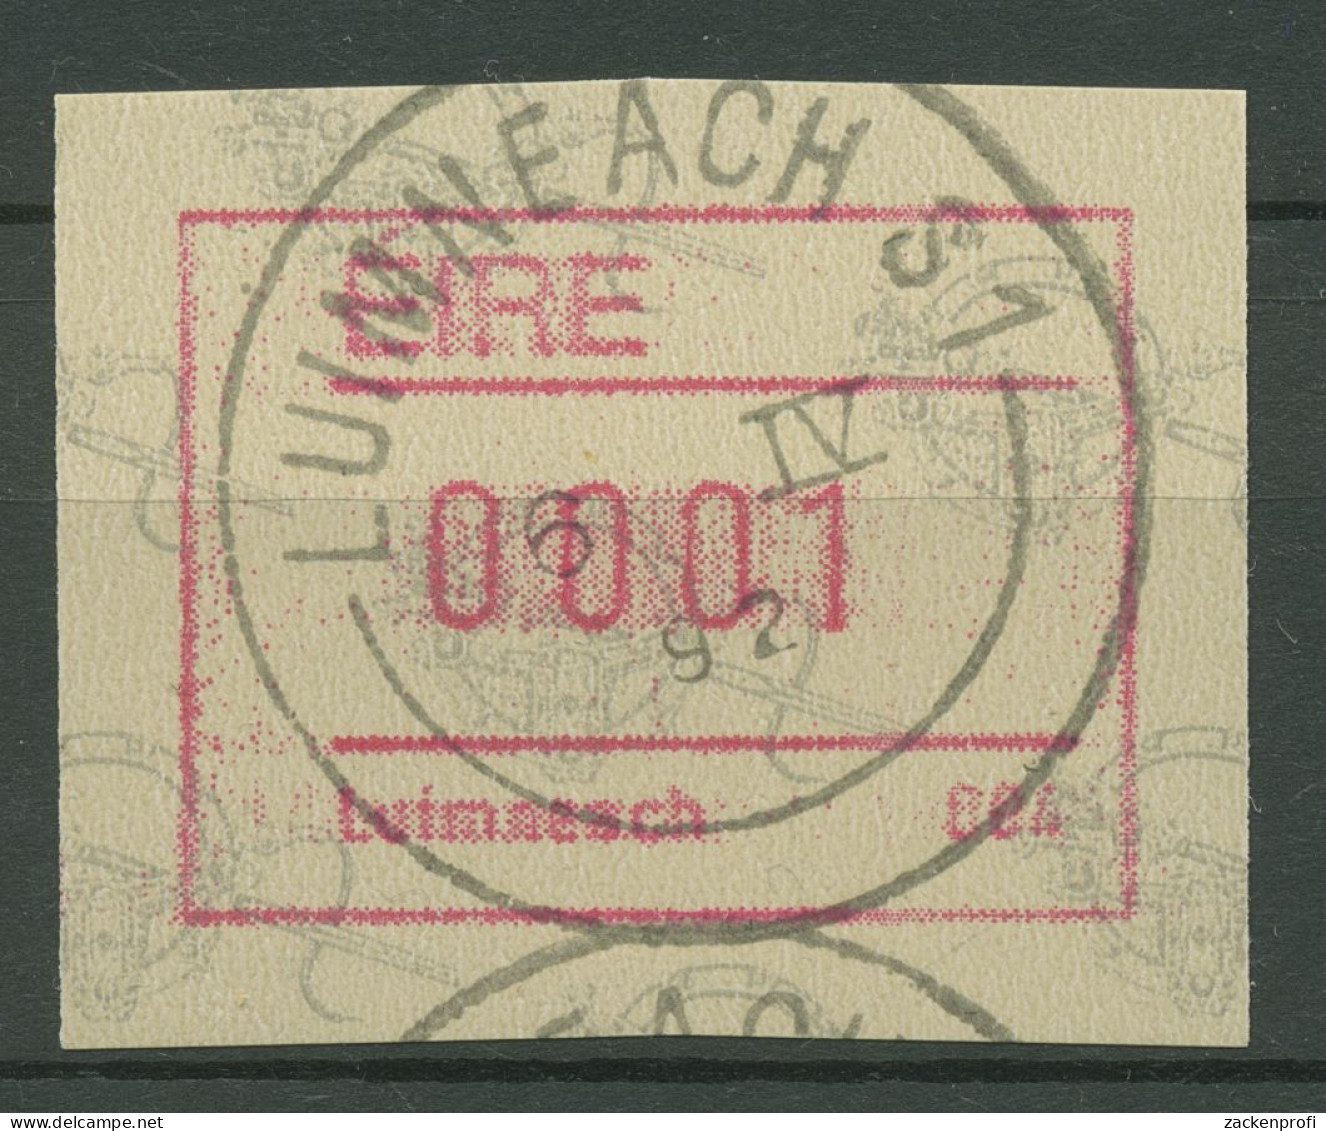 Irland Automatenmarken 1992 Einzelwert ATM 4 Gestempelt - Viñetas De Franqueo (Frama)